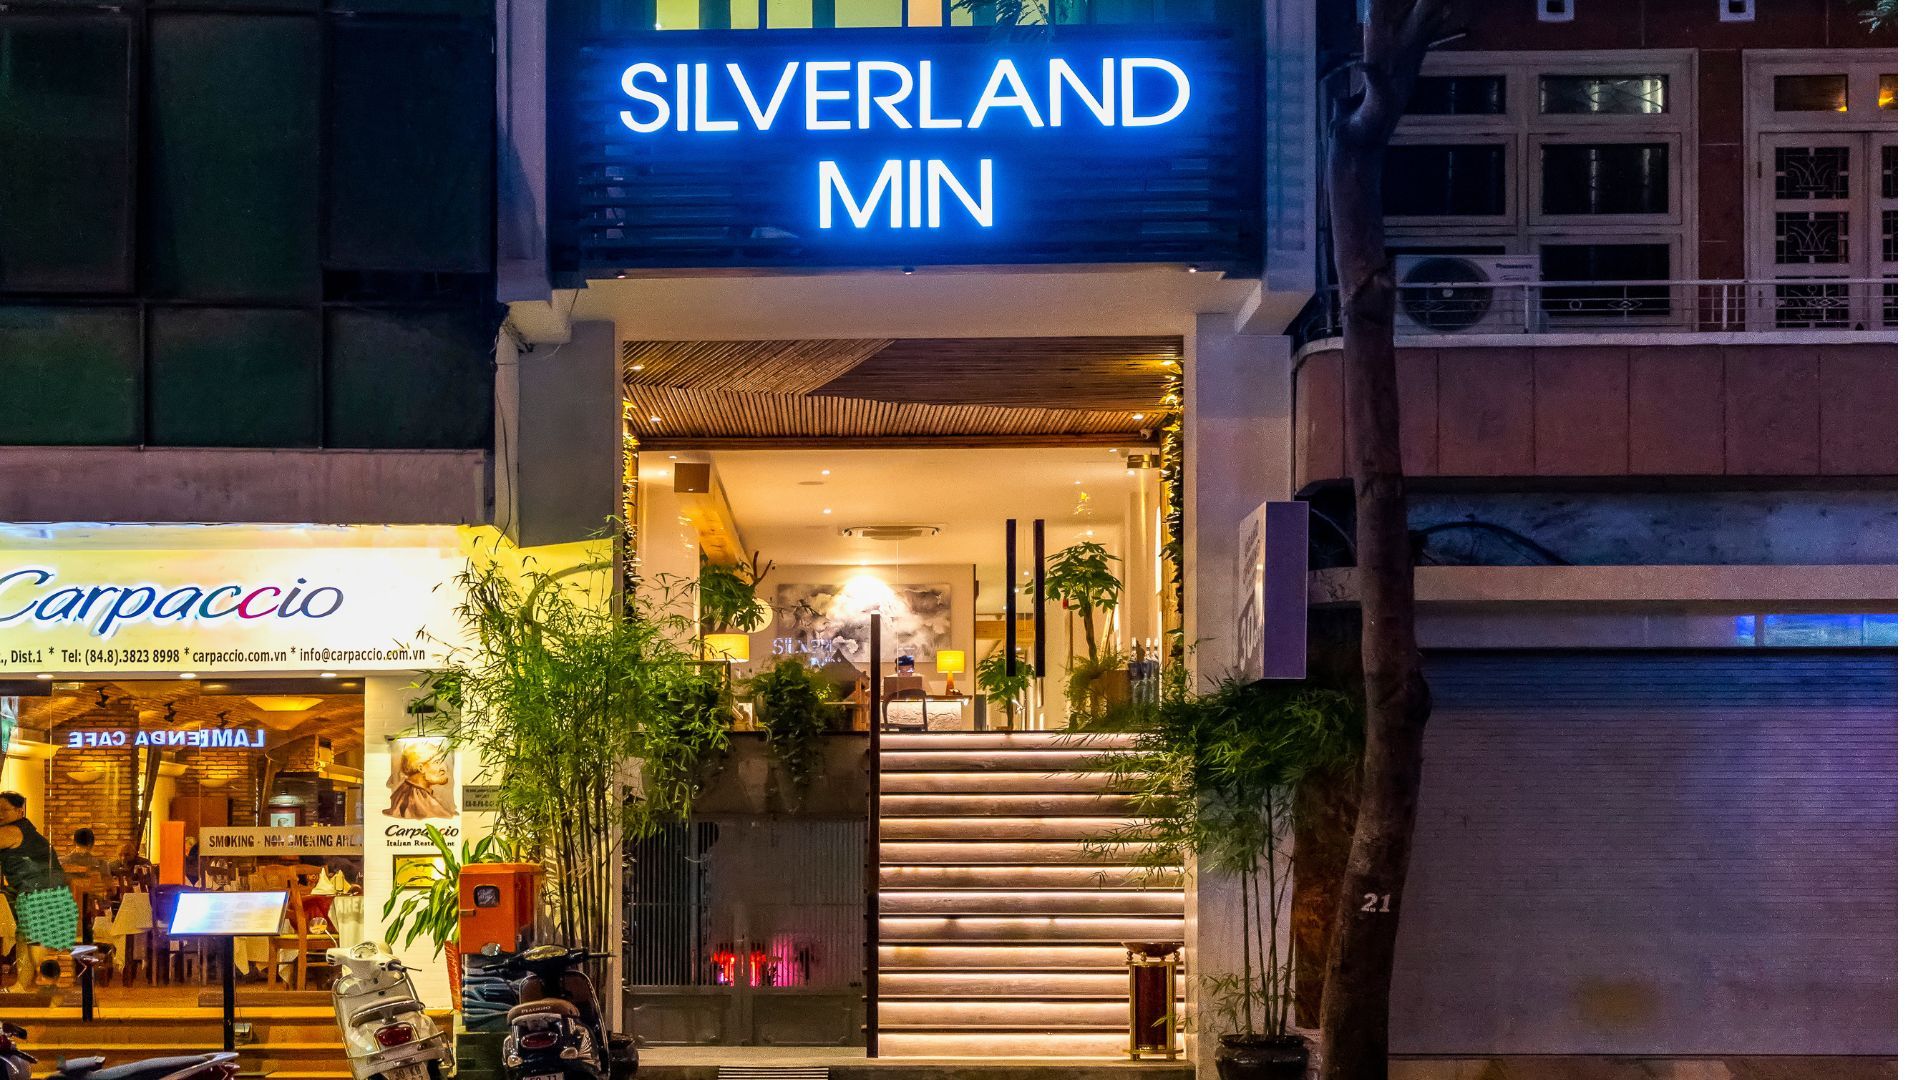 Silverland Min Hotel